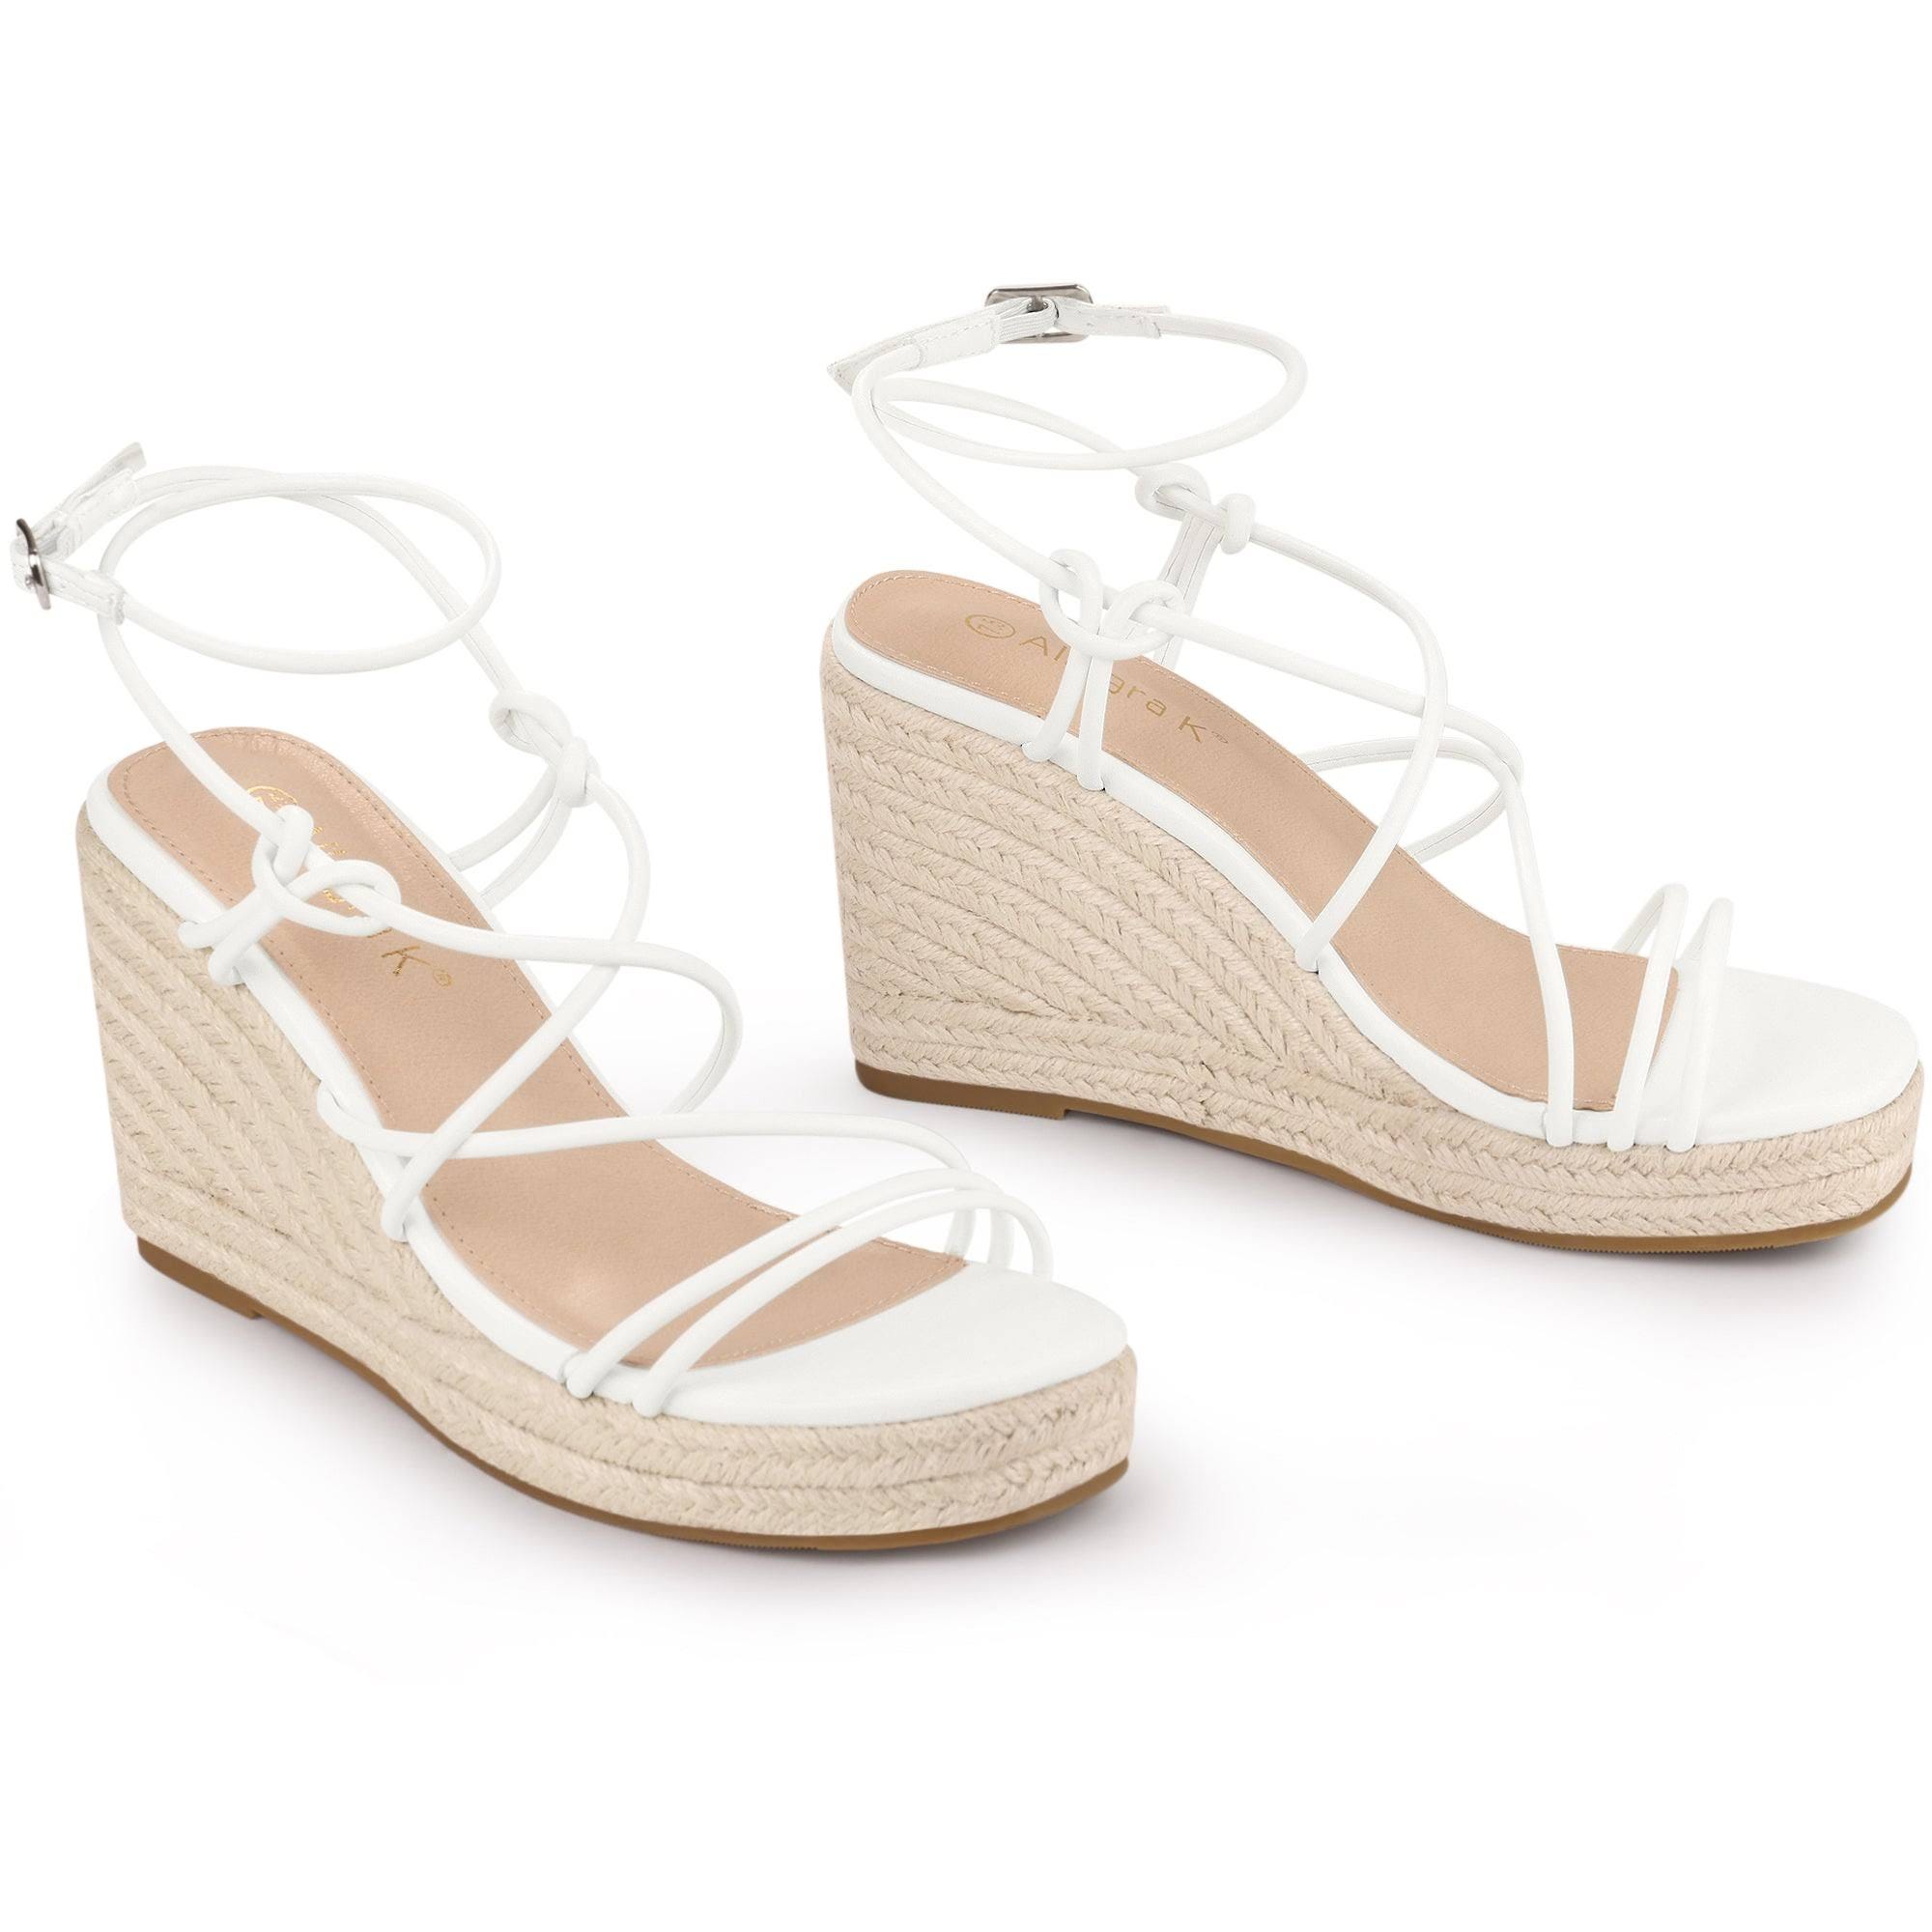 Stylish White Espadrilles Wedge Sandals with Platform Heels | Image